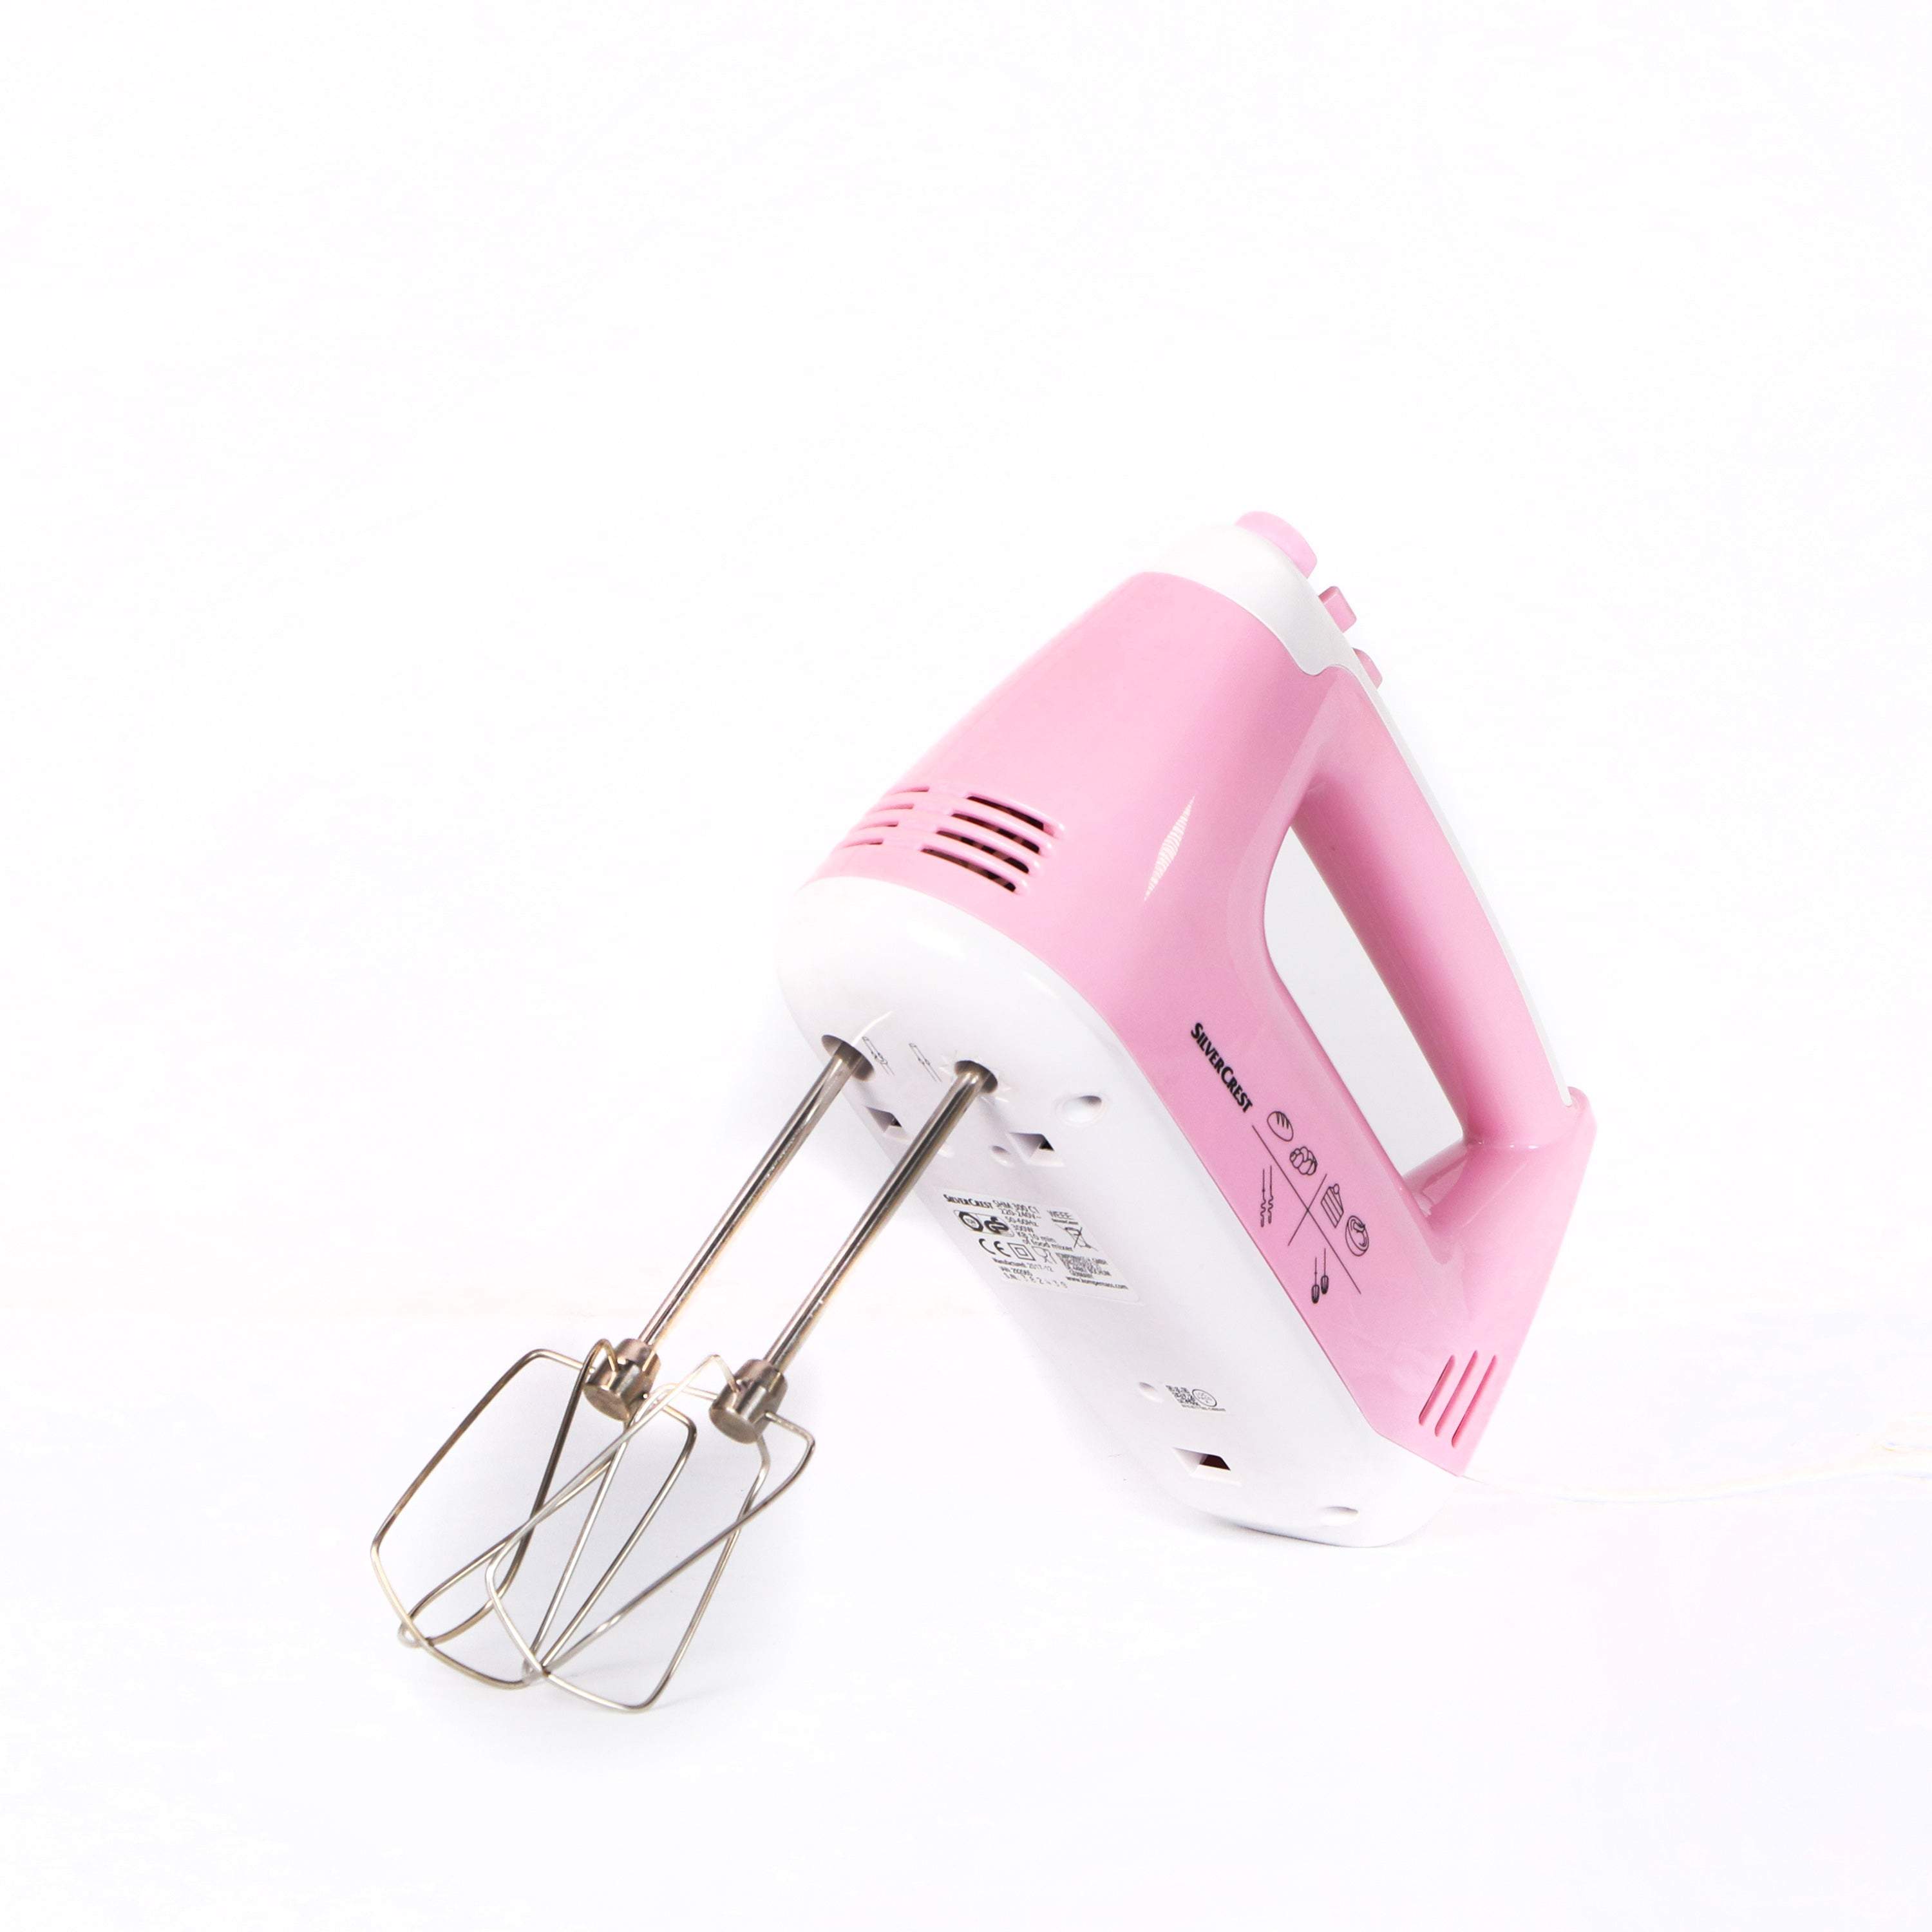 Silvercrest Hand Mixer 300W (Pink) – Royal Brands Co